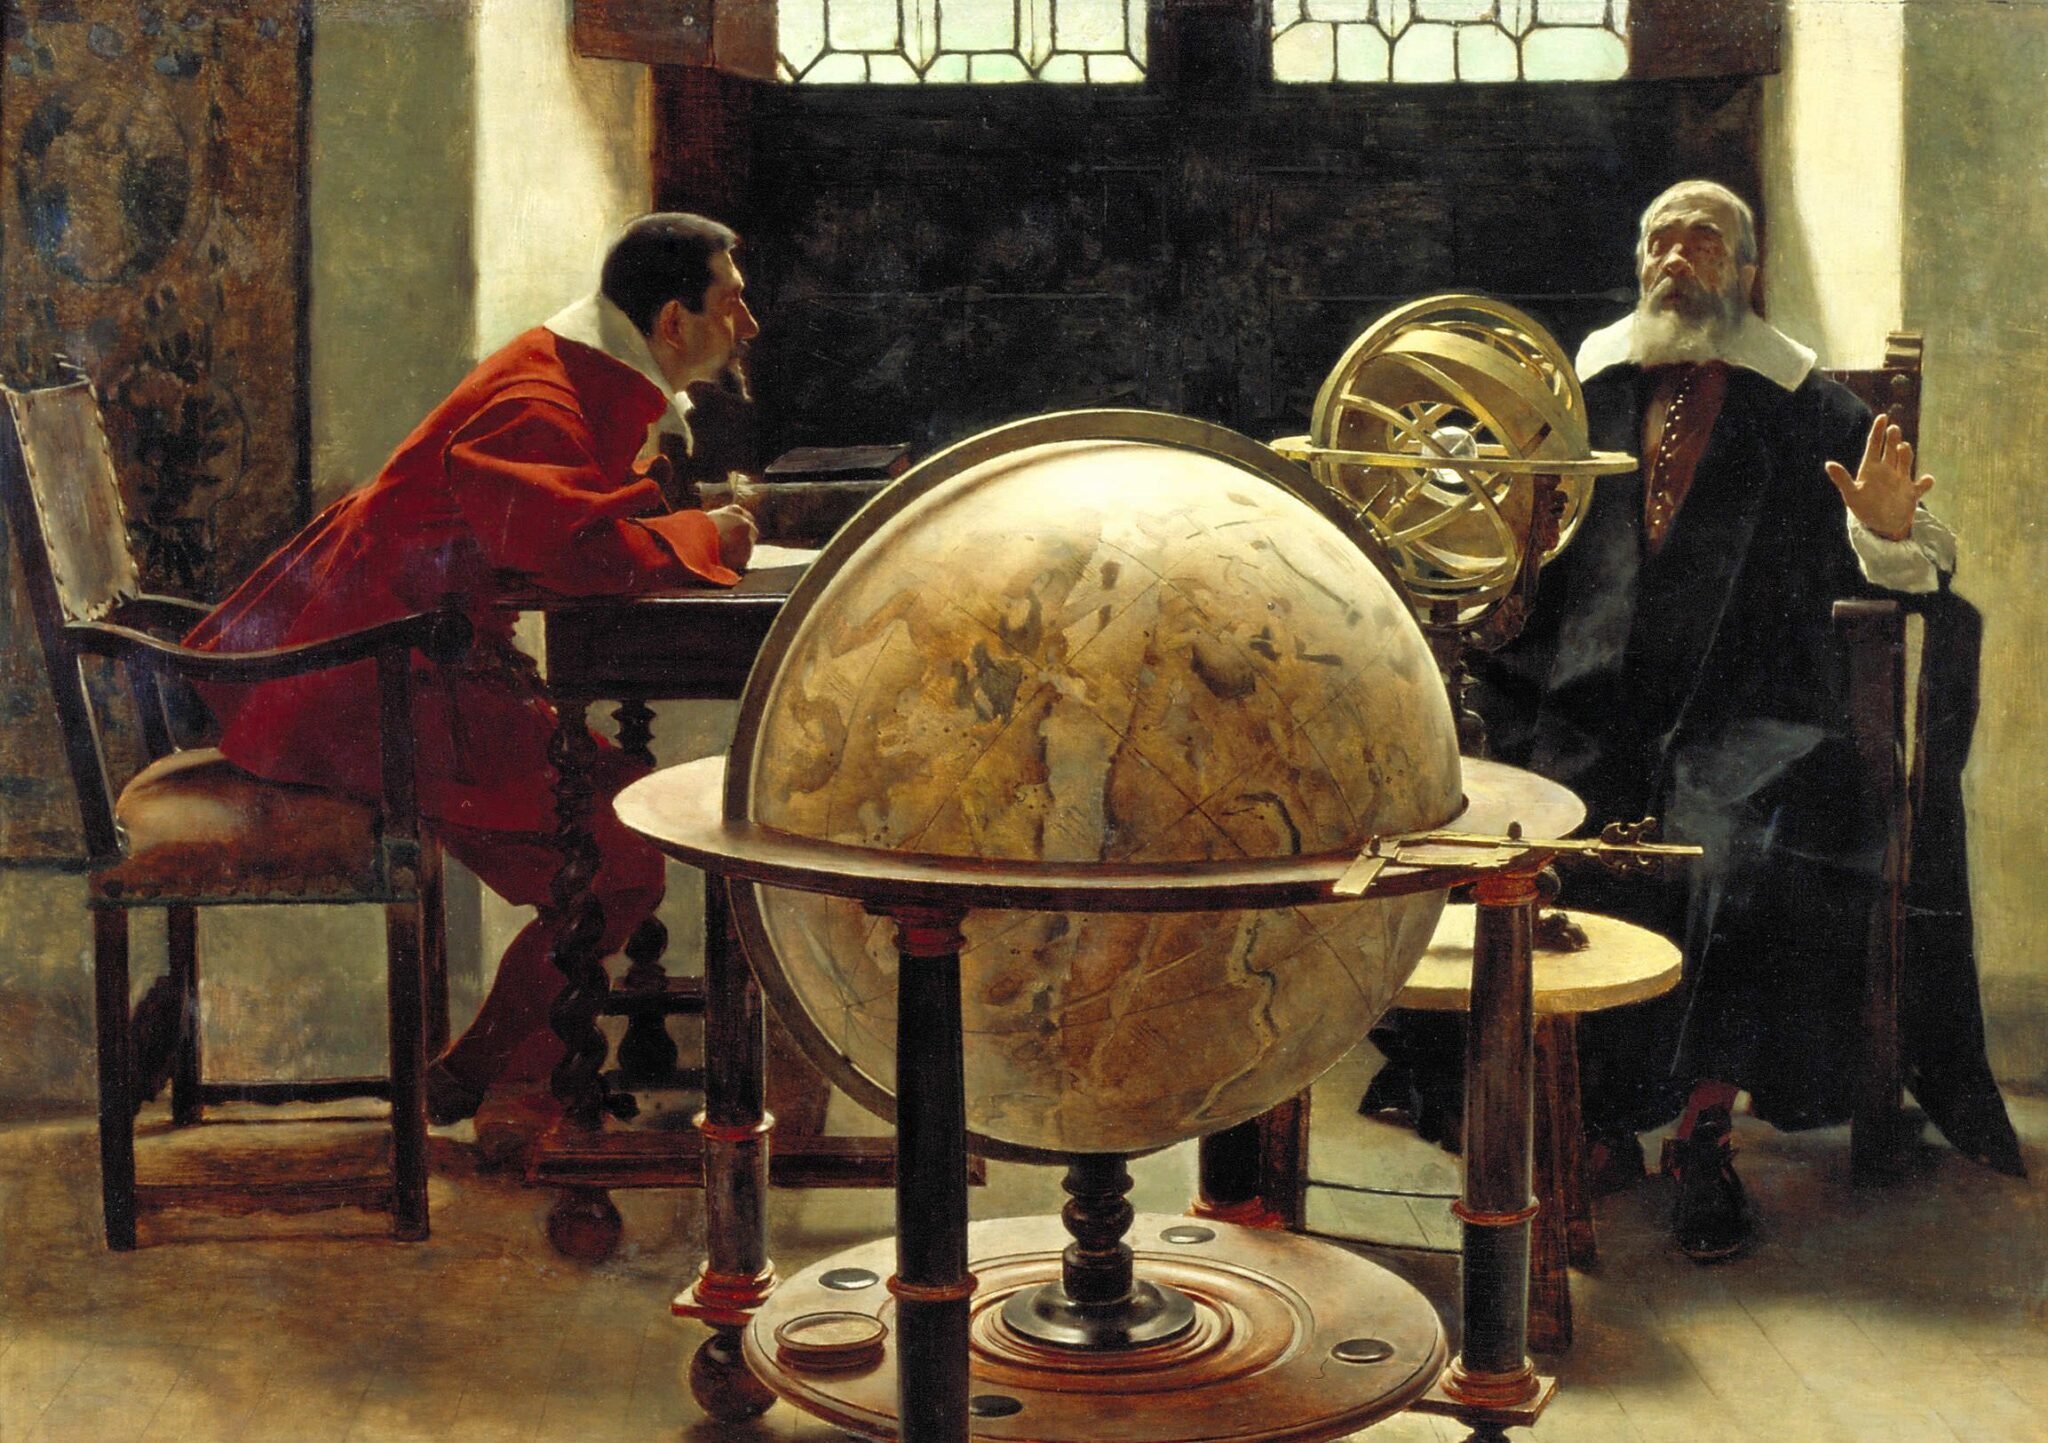 Наука 17 18 веков. Галилео Галилей наука. Галилей эпоха Возрождения. Галилео Галилей обучает Вивиани. Галилео Галилей астрономия.